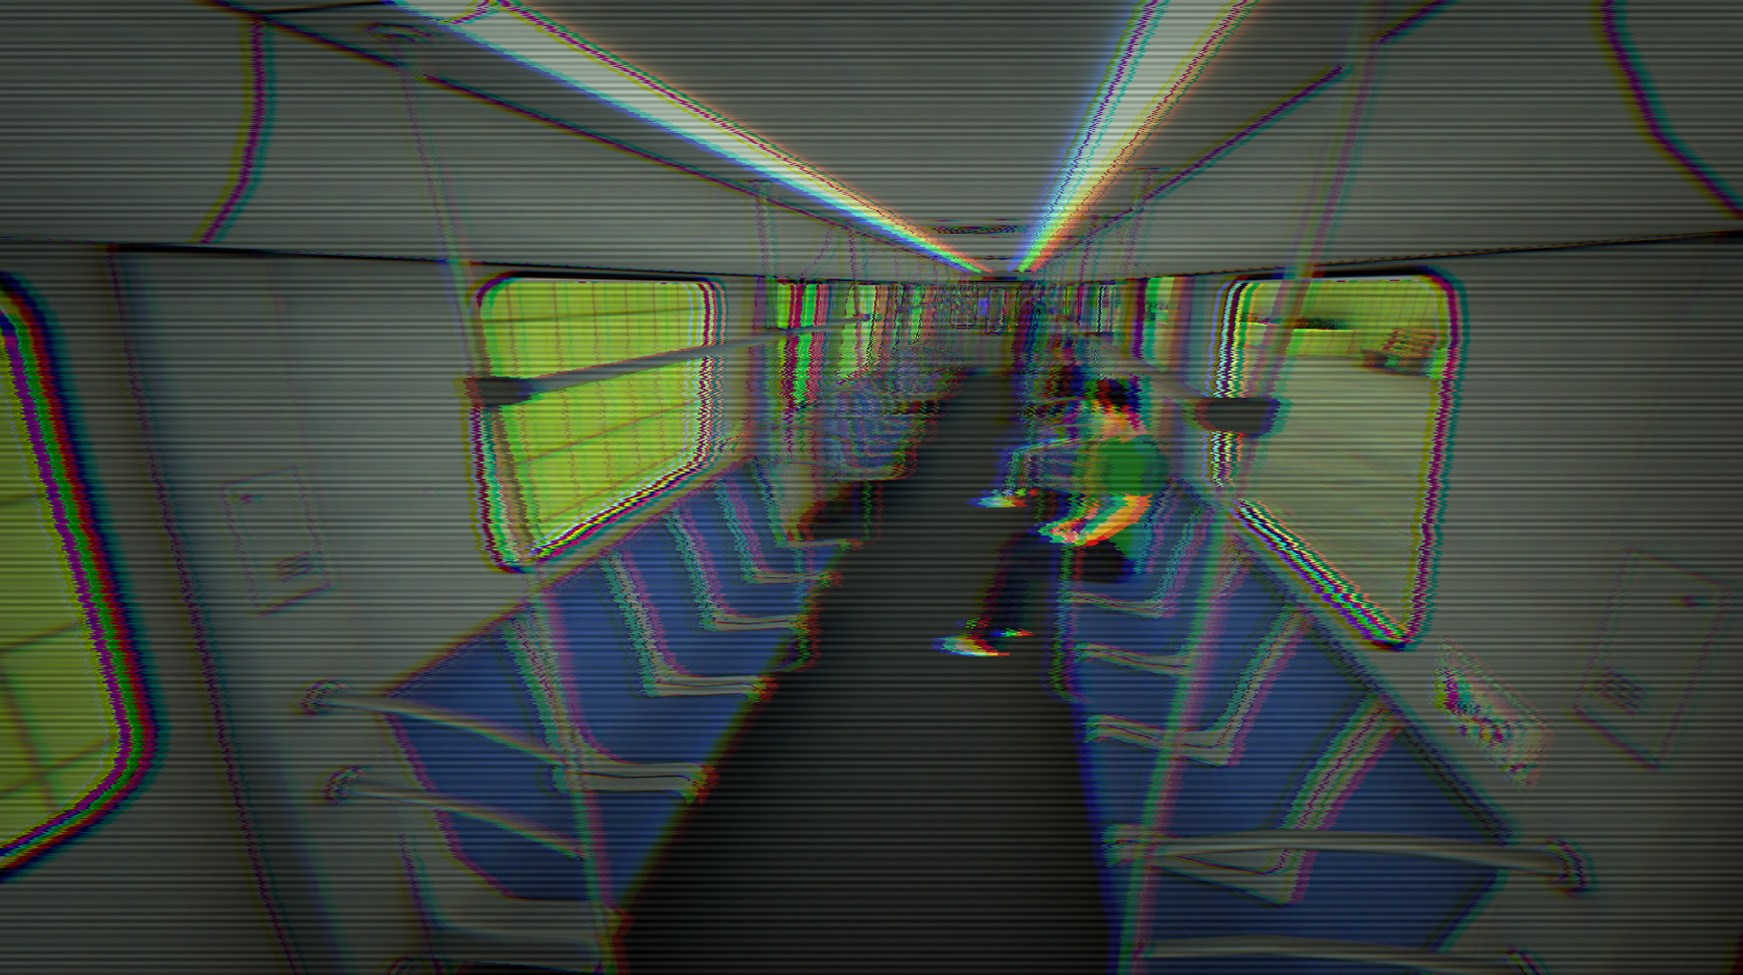 Subway Simulator